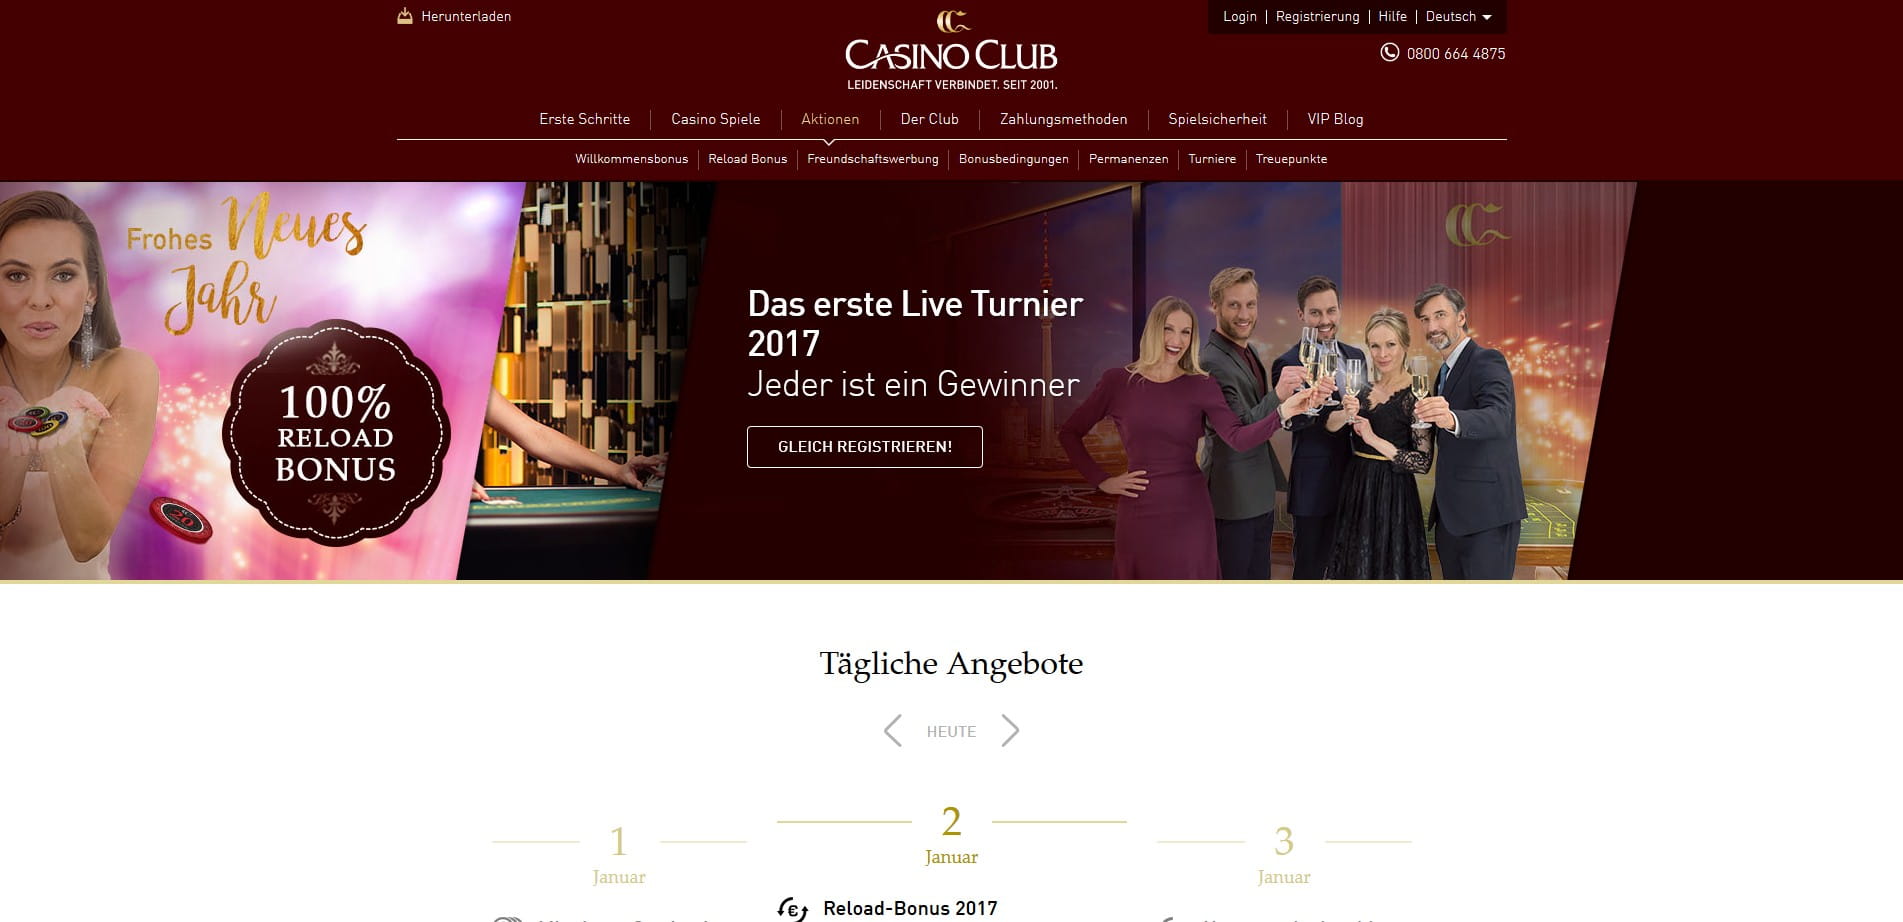 global casino online